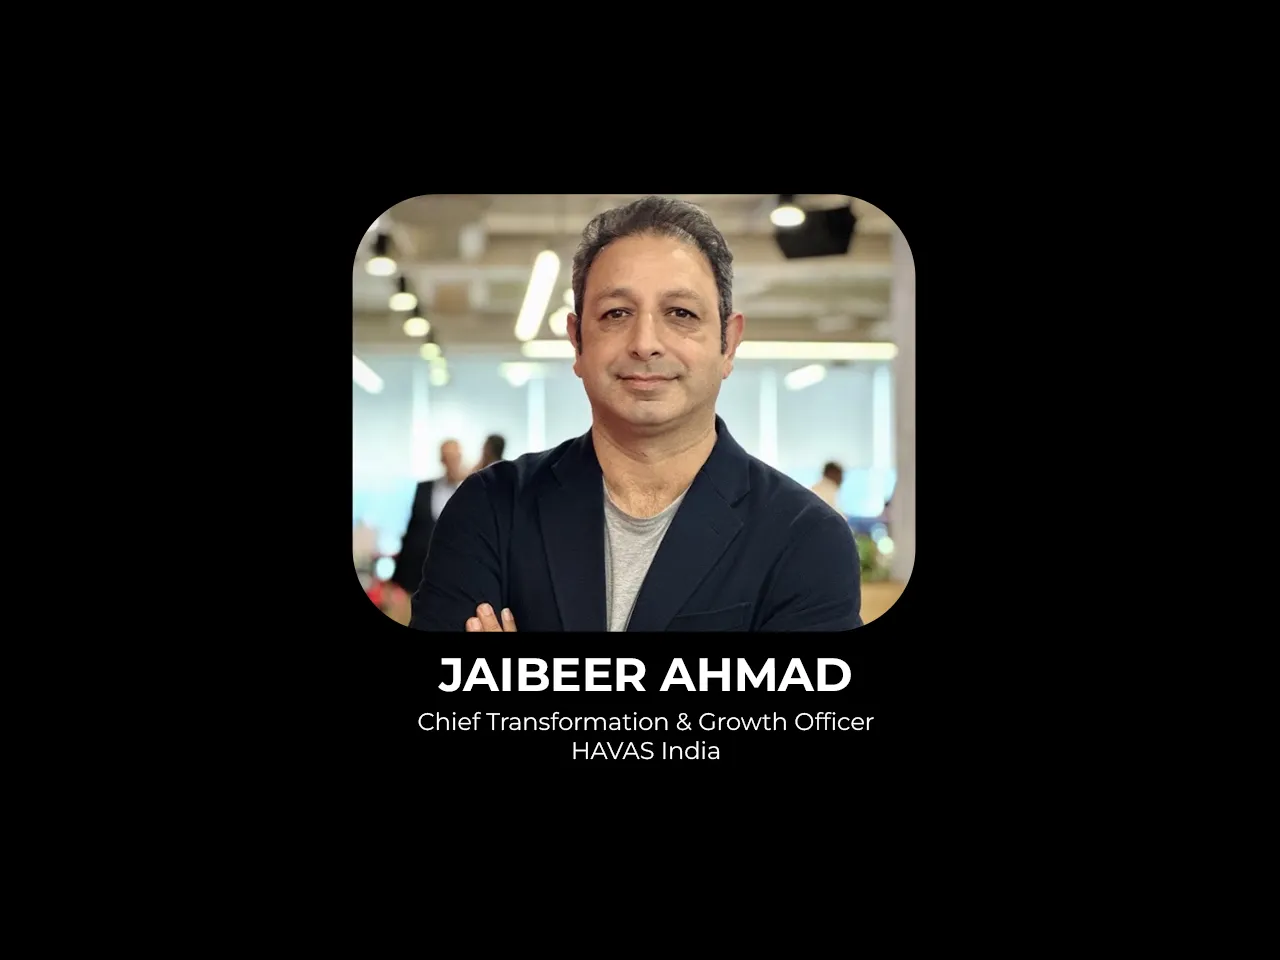 HAVAS India elevates Jaibeer Ahmad as Chief Transformation & Growth Officer